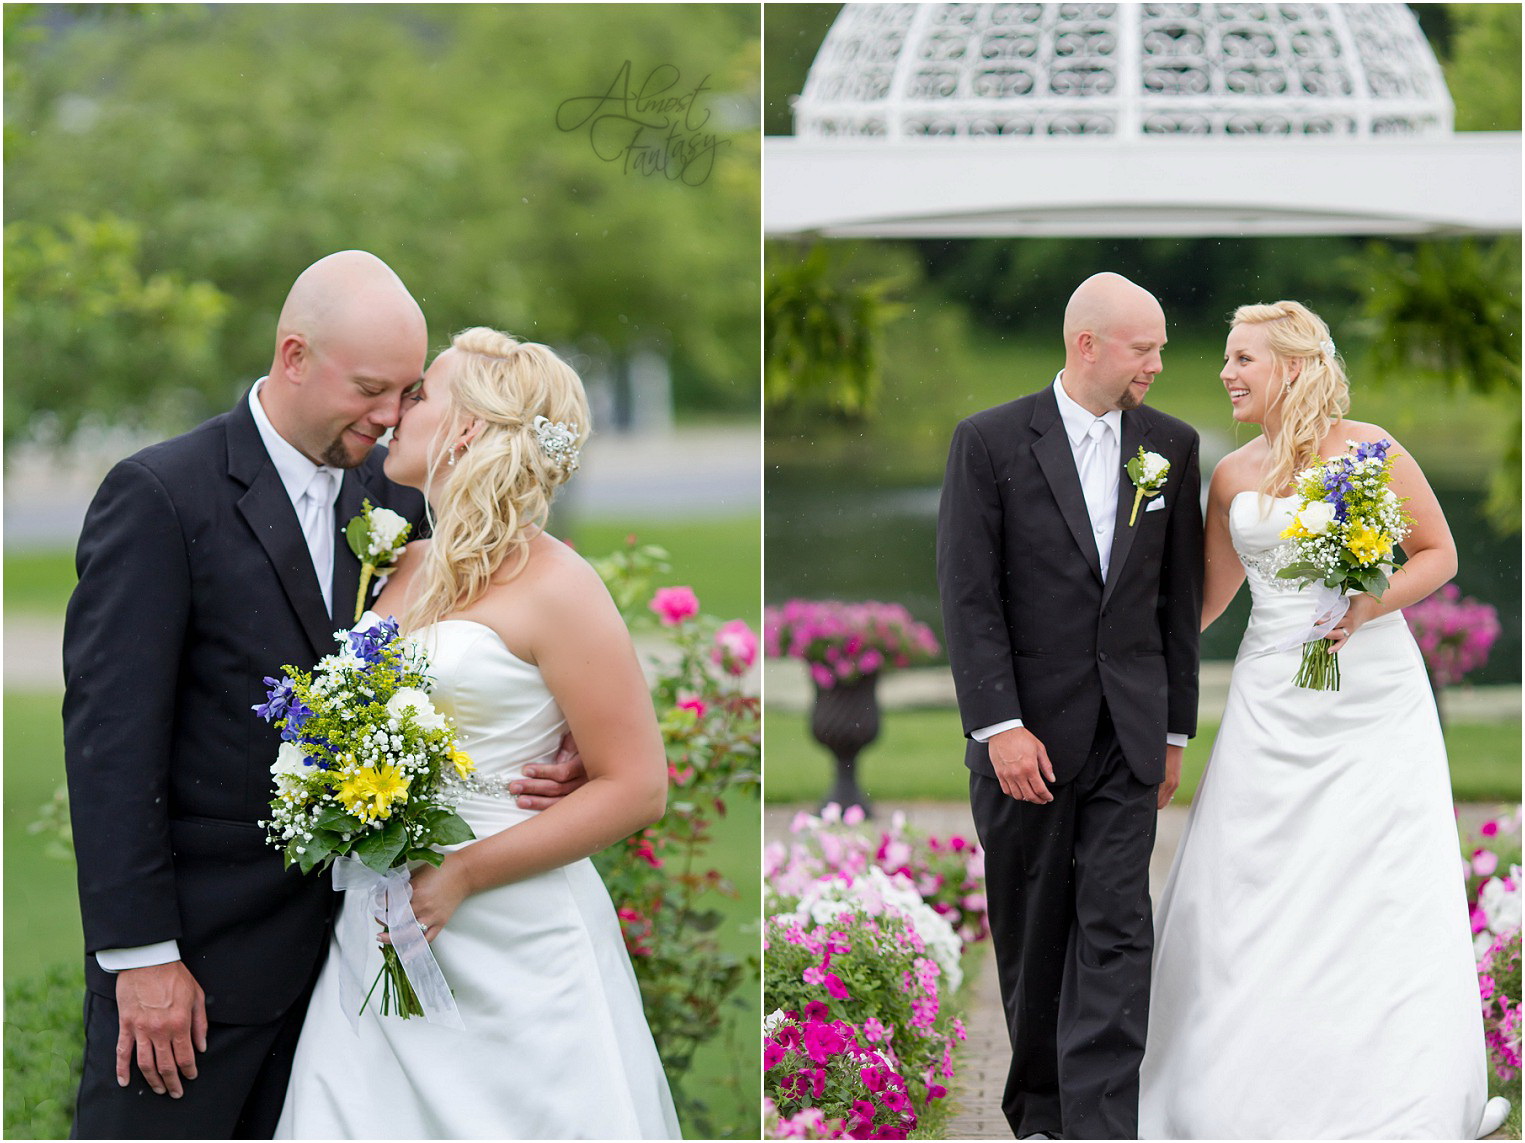 Apple Blossom Chapel Outdoor Ceremony Fennville Wedding - Kalamazoo Photographer Almost Fantasy_0025.jpg